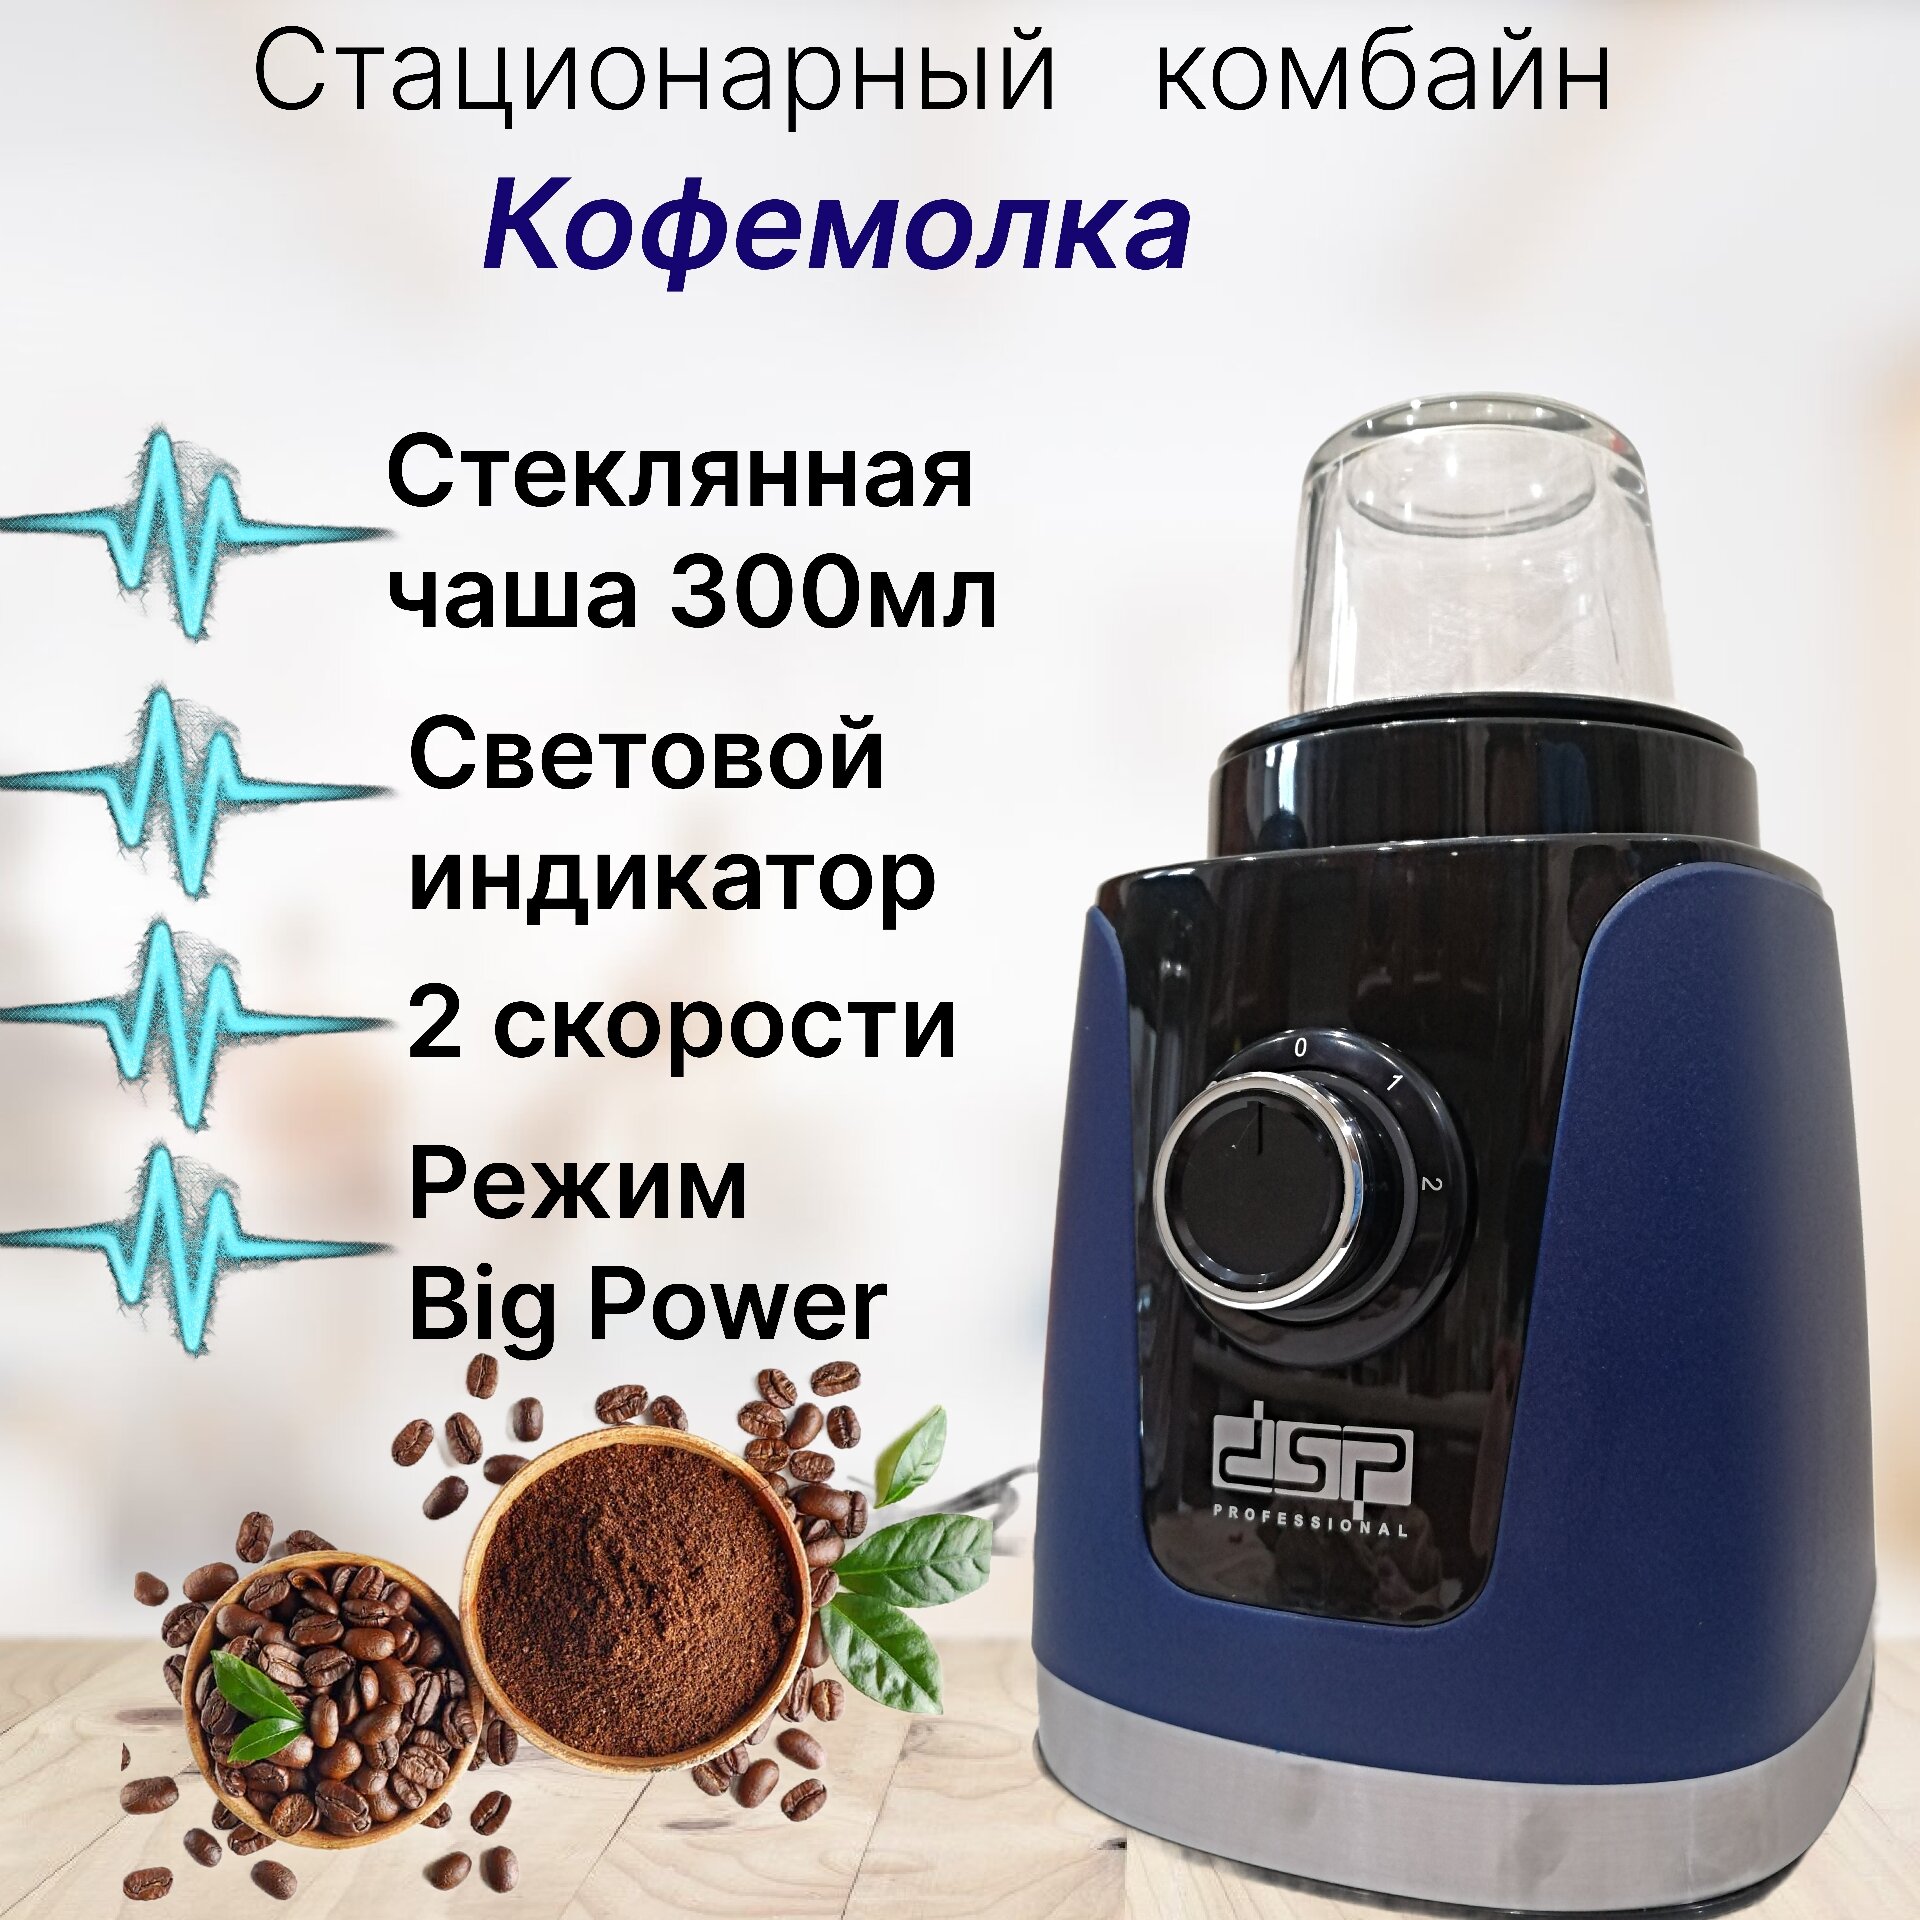 Кухонная машина "Блендер + Кофемолка" 350Вт